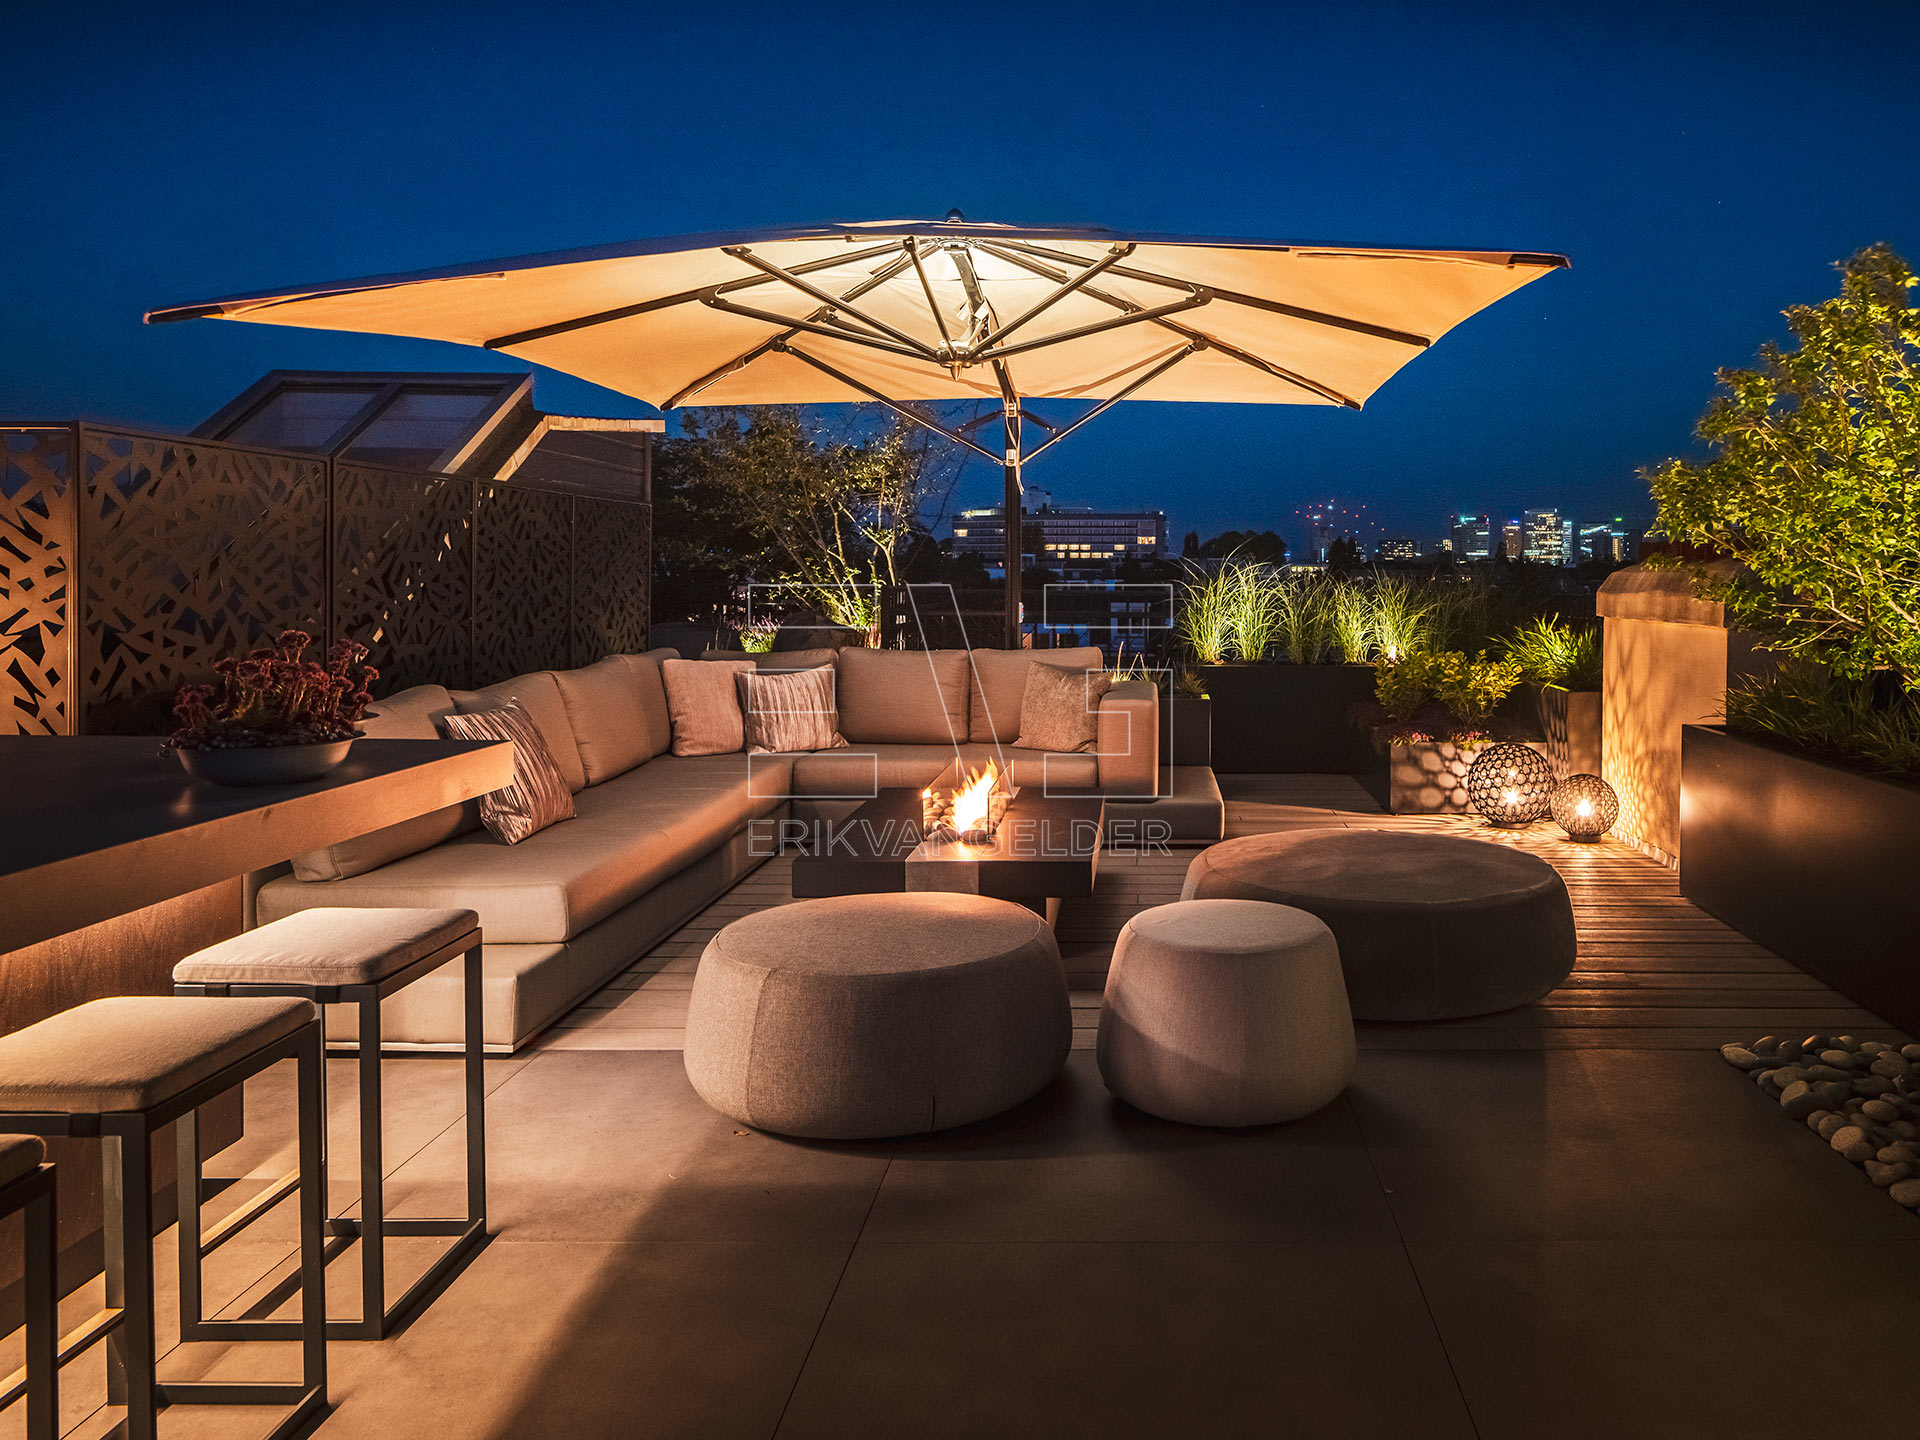 Daktuin design metropolitan luxury sfeervolle lounge loungebank met poef vuurtafel erikvangelder tuinarchitect tuindesign luxury